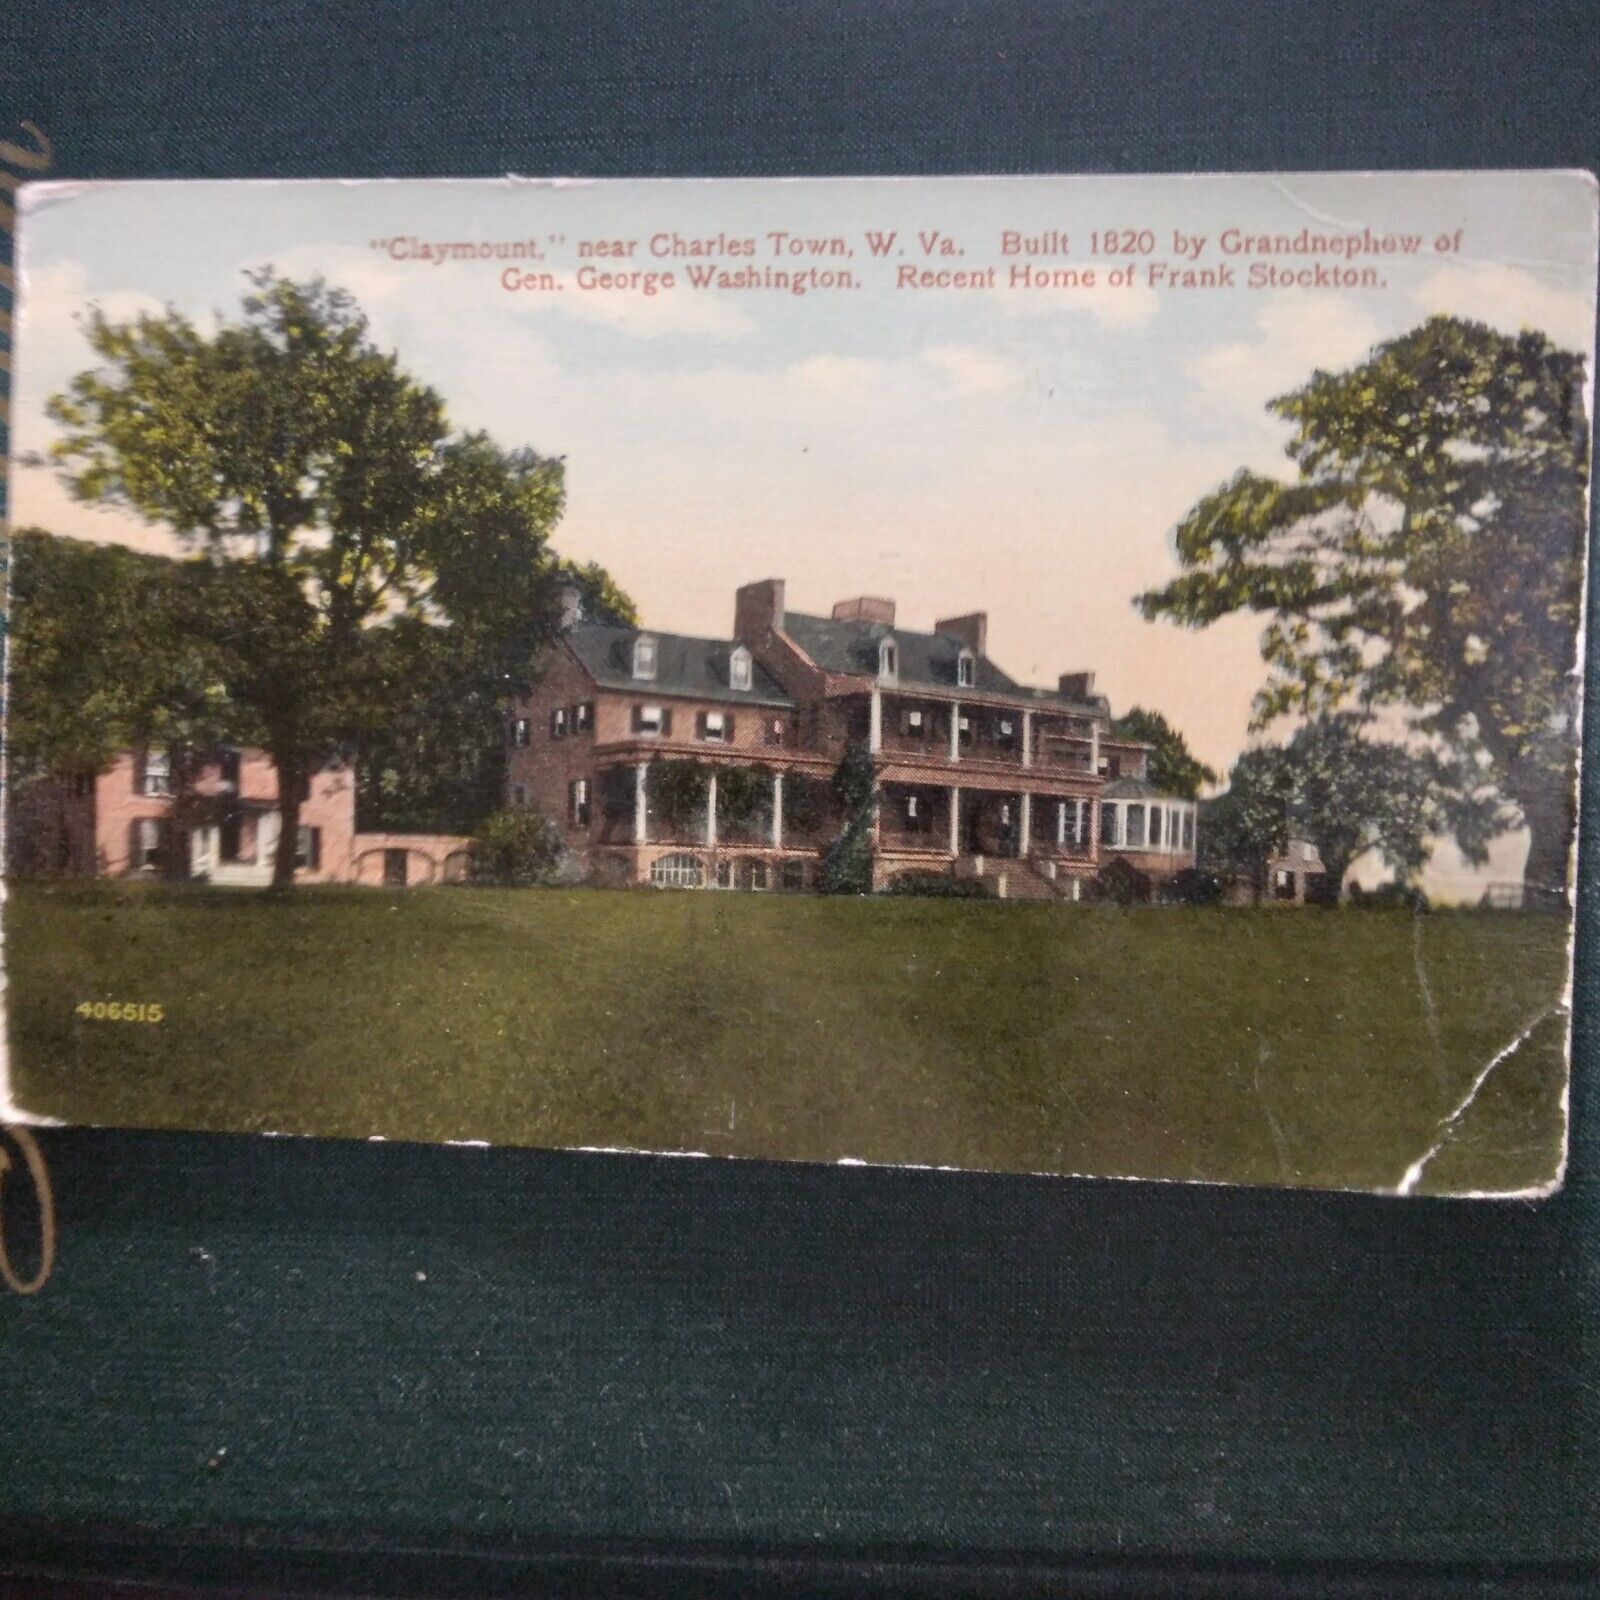 Charlestown WV's Claymont Postcard. Built By Washington's Grand Nephew In 1820.